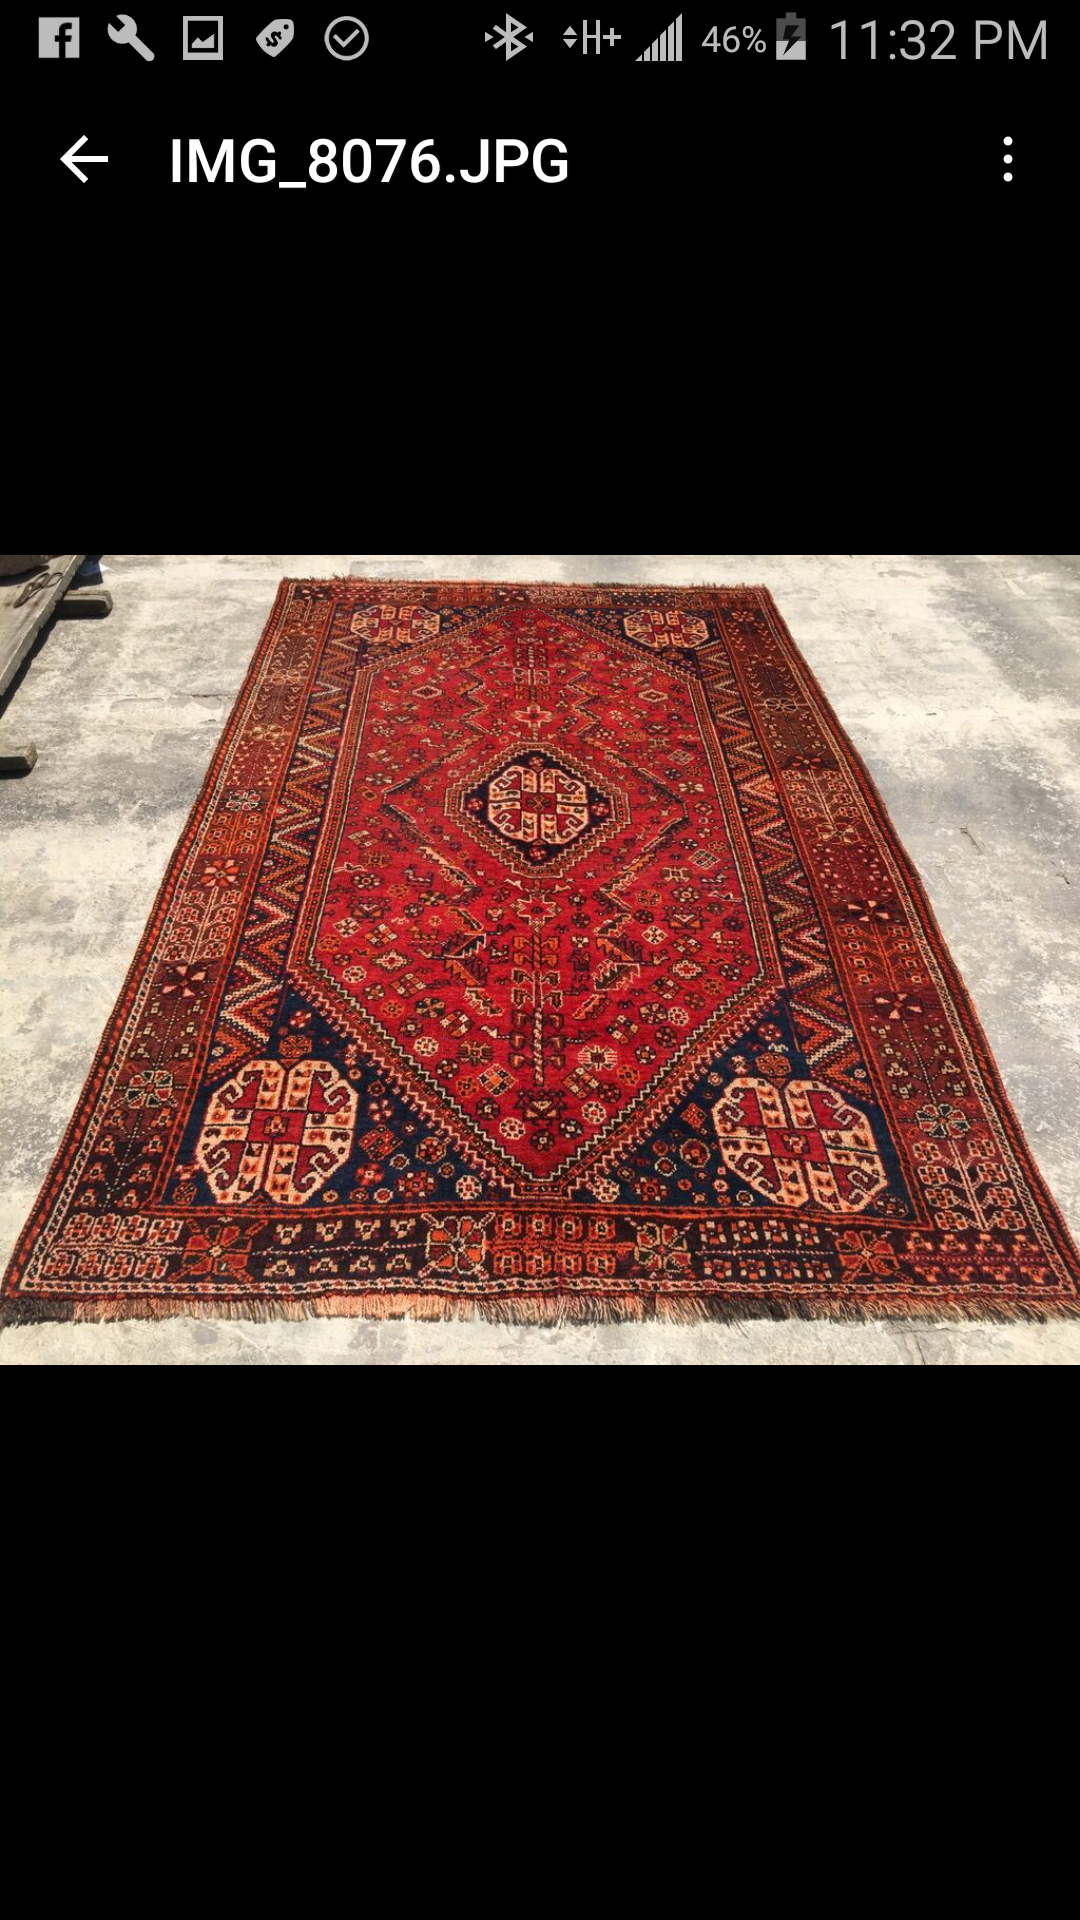 Handmade Persian antique collectible rug